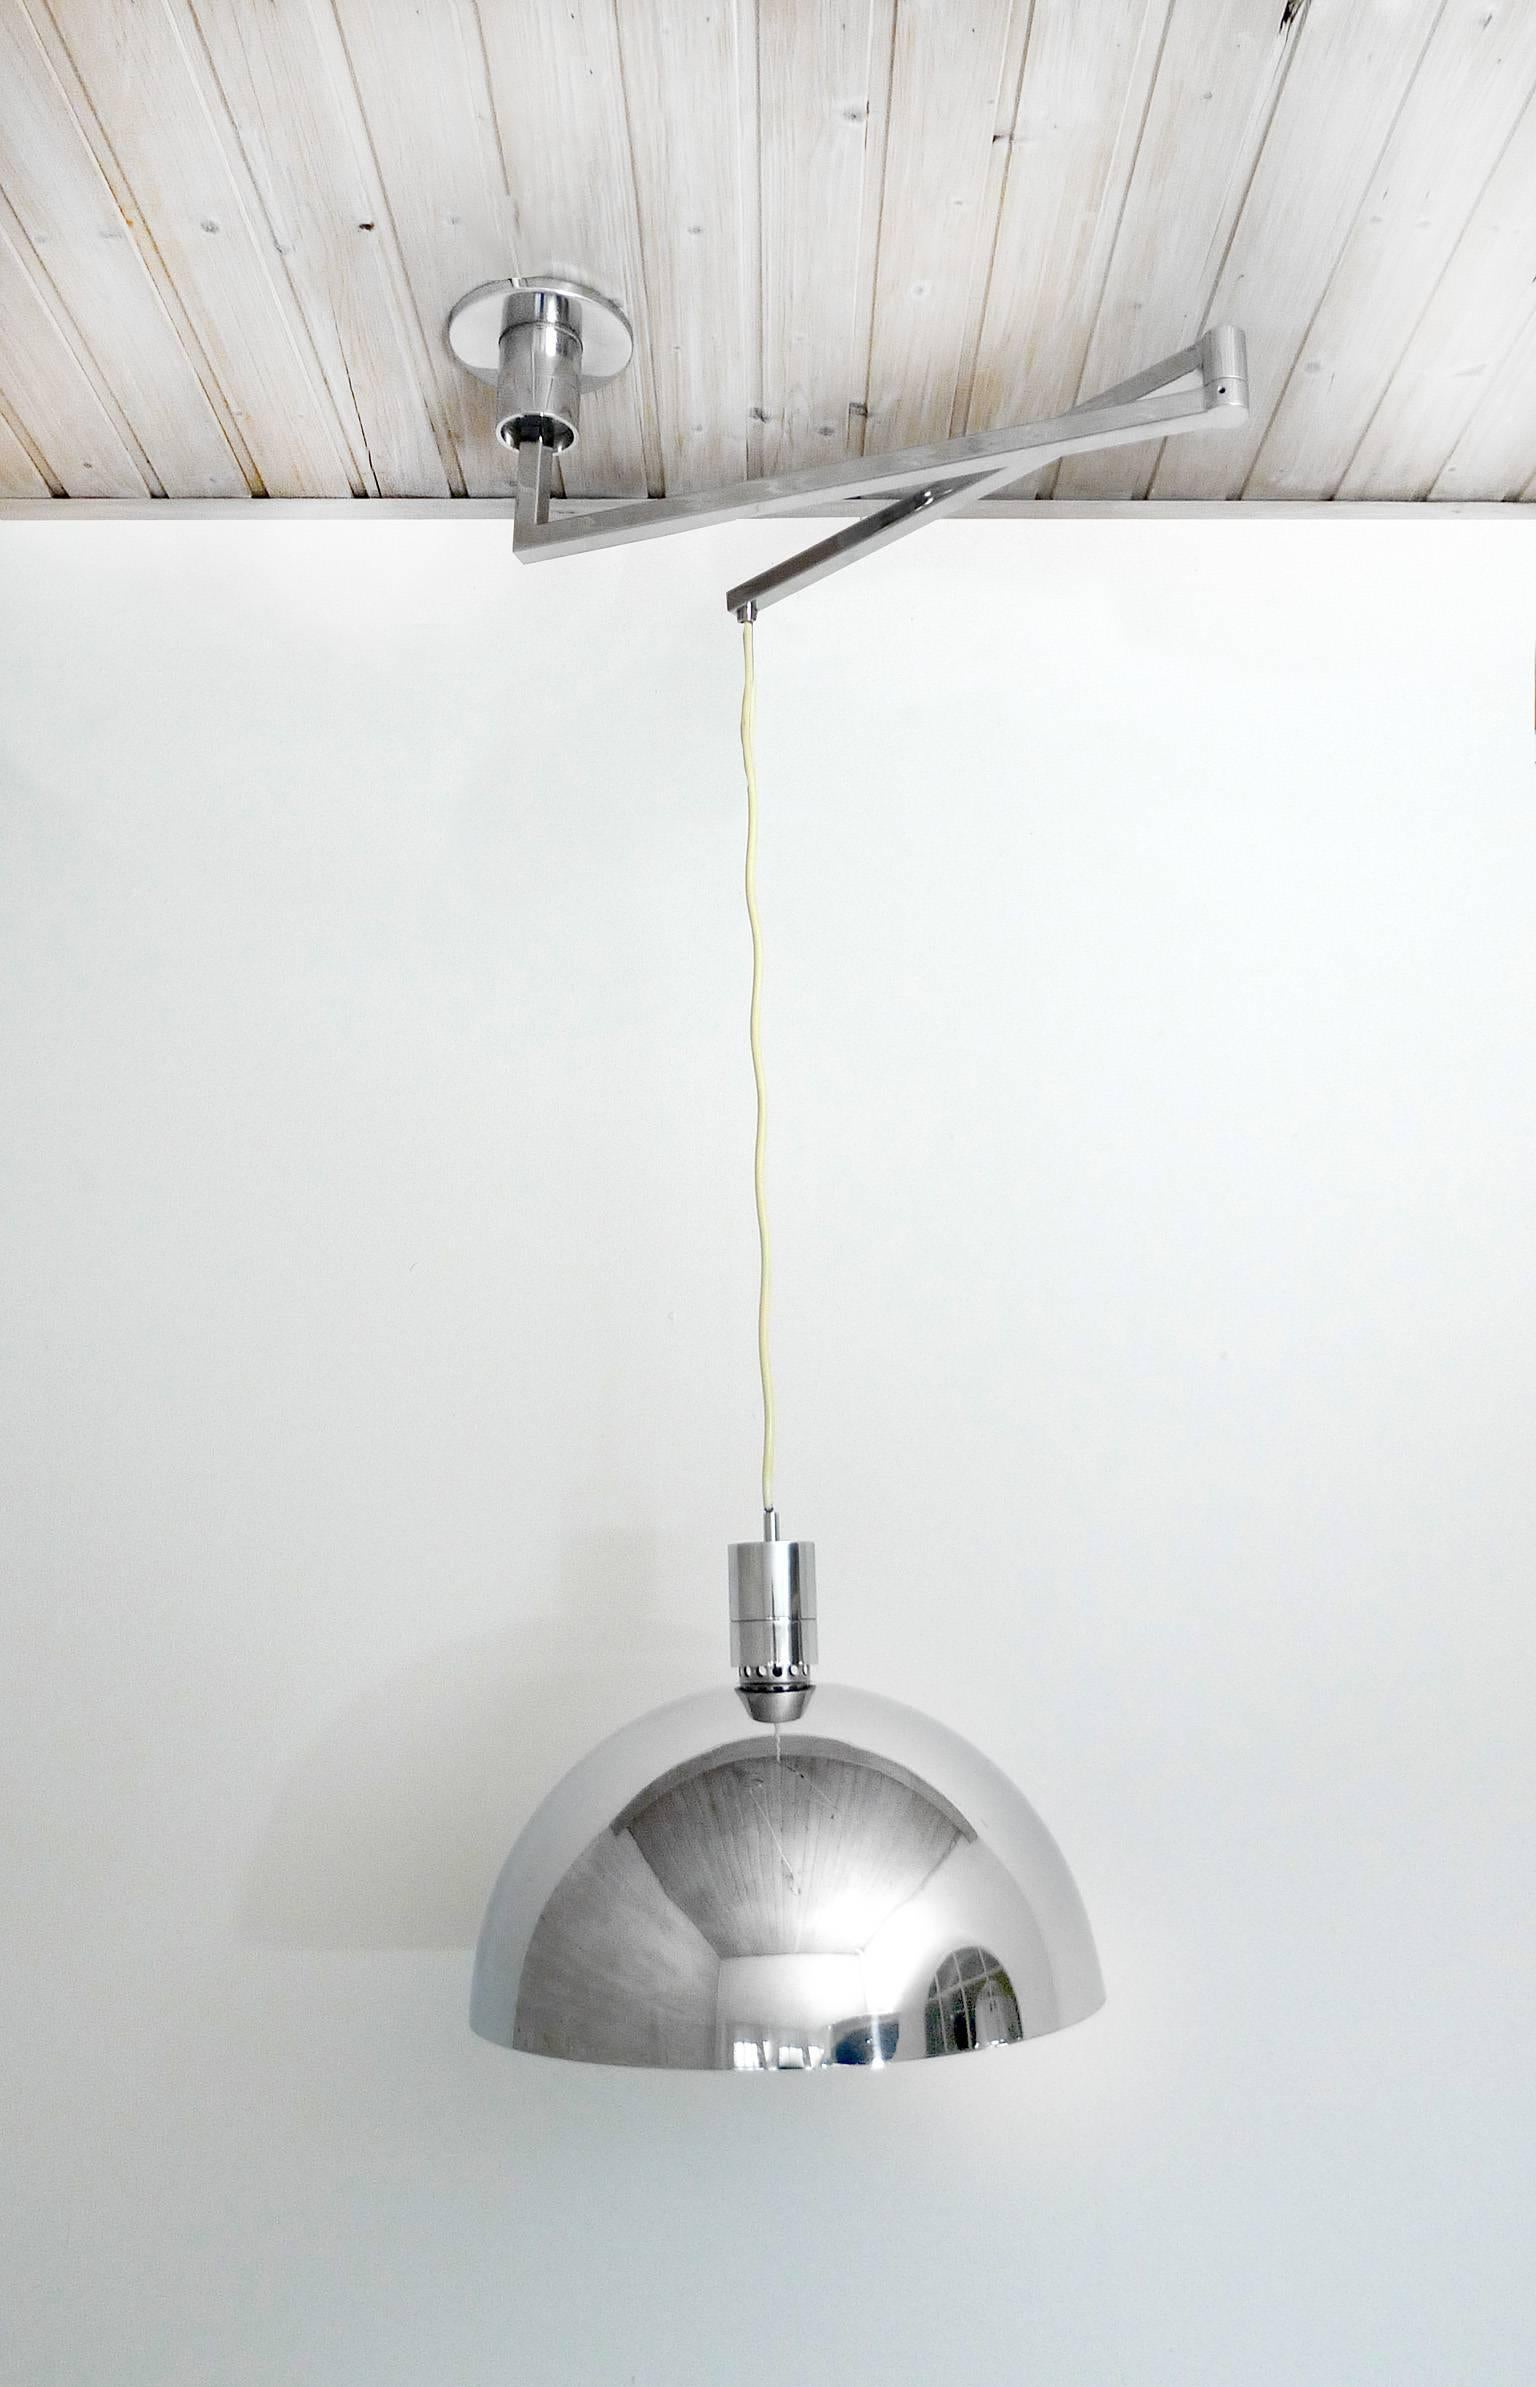 Mid-Century Modern Chromed Swing Arm Ceiling Lamp by Franco Albini for Sirrah, Italy, 1969